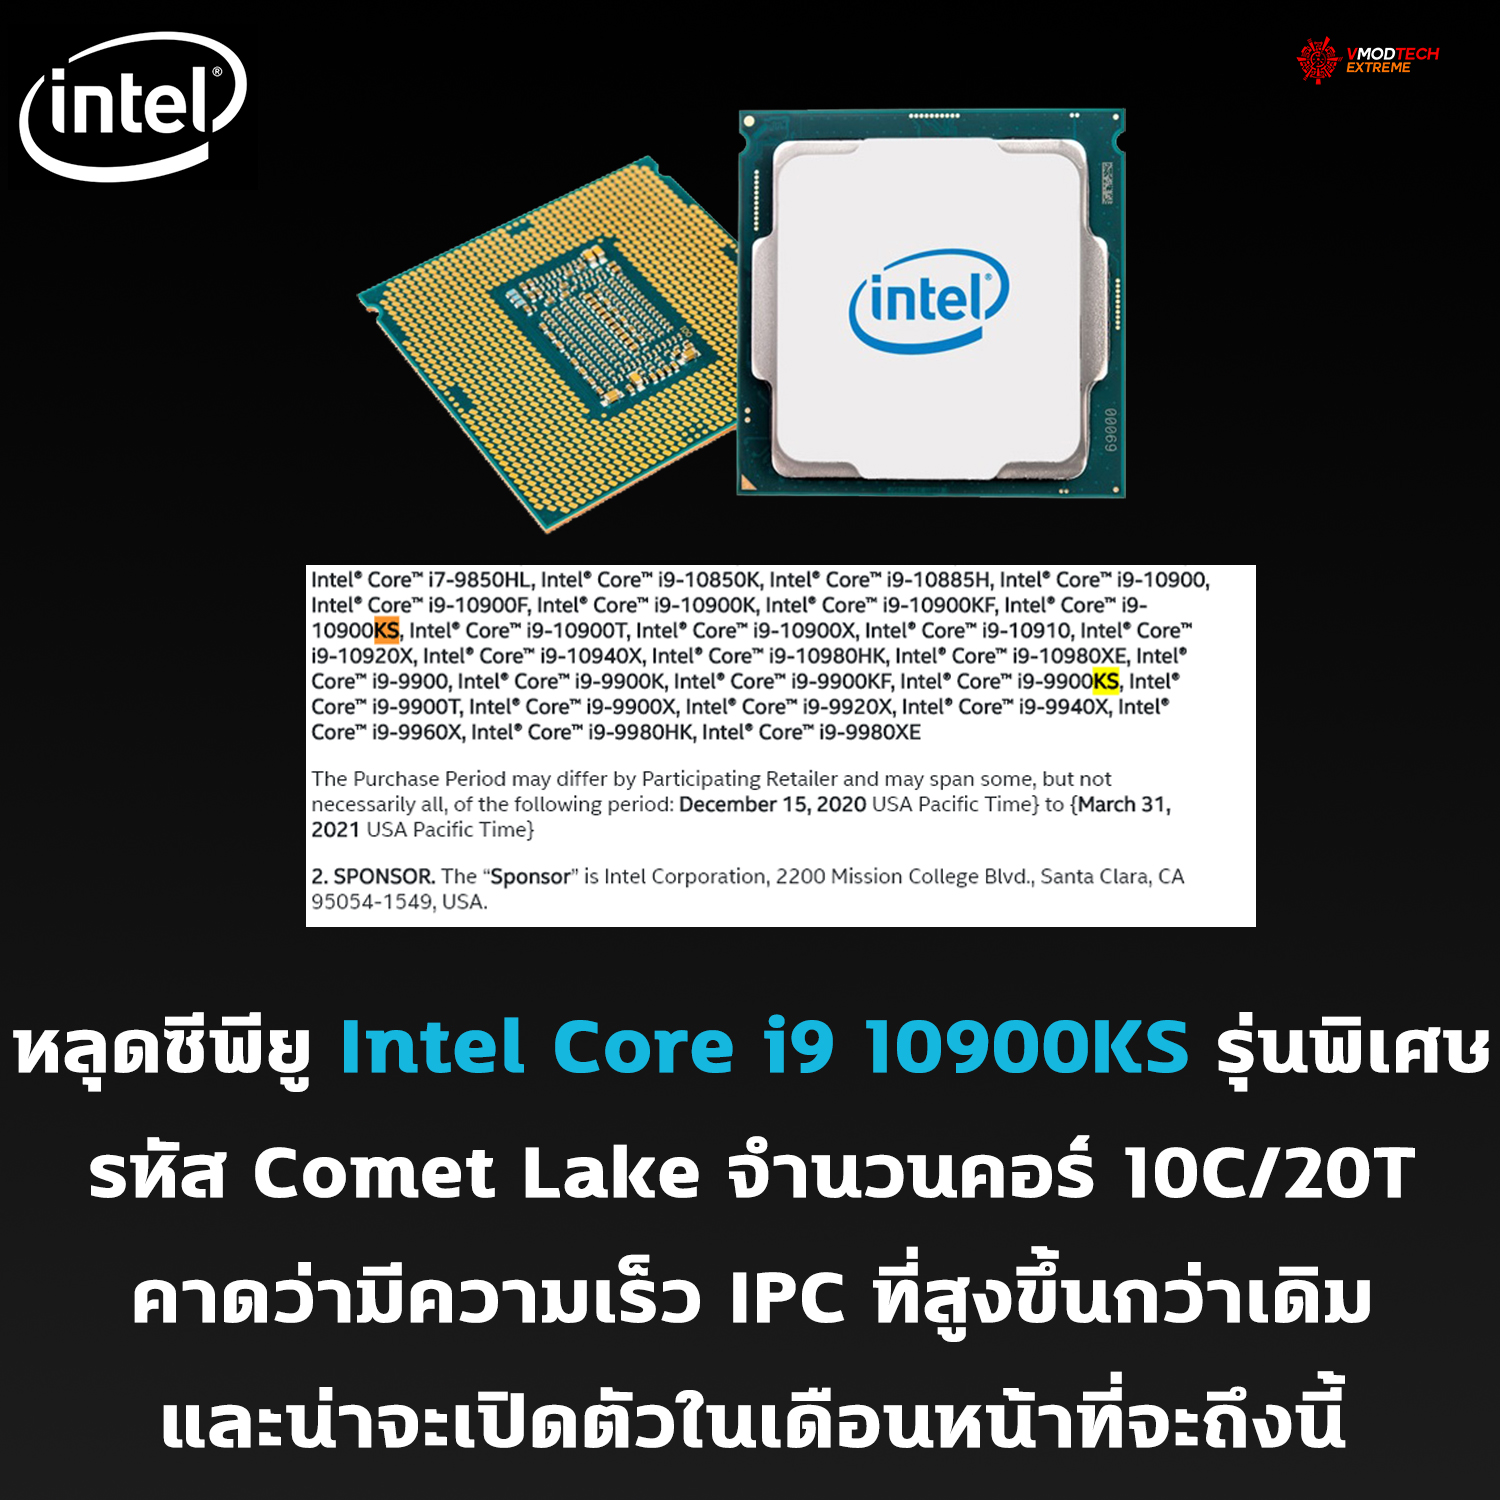 intel core i9 10900ks หลุดซีพียู Intel Core i9 10900KS รุ่นพิเศษคาดว่ามีความเร็วที่สูงขึ้นกว่าเดิมและน่าจะเปิดตัวในเดือนหน้าที่จะถึงนี้